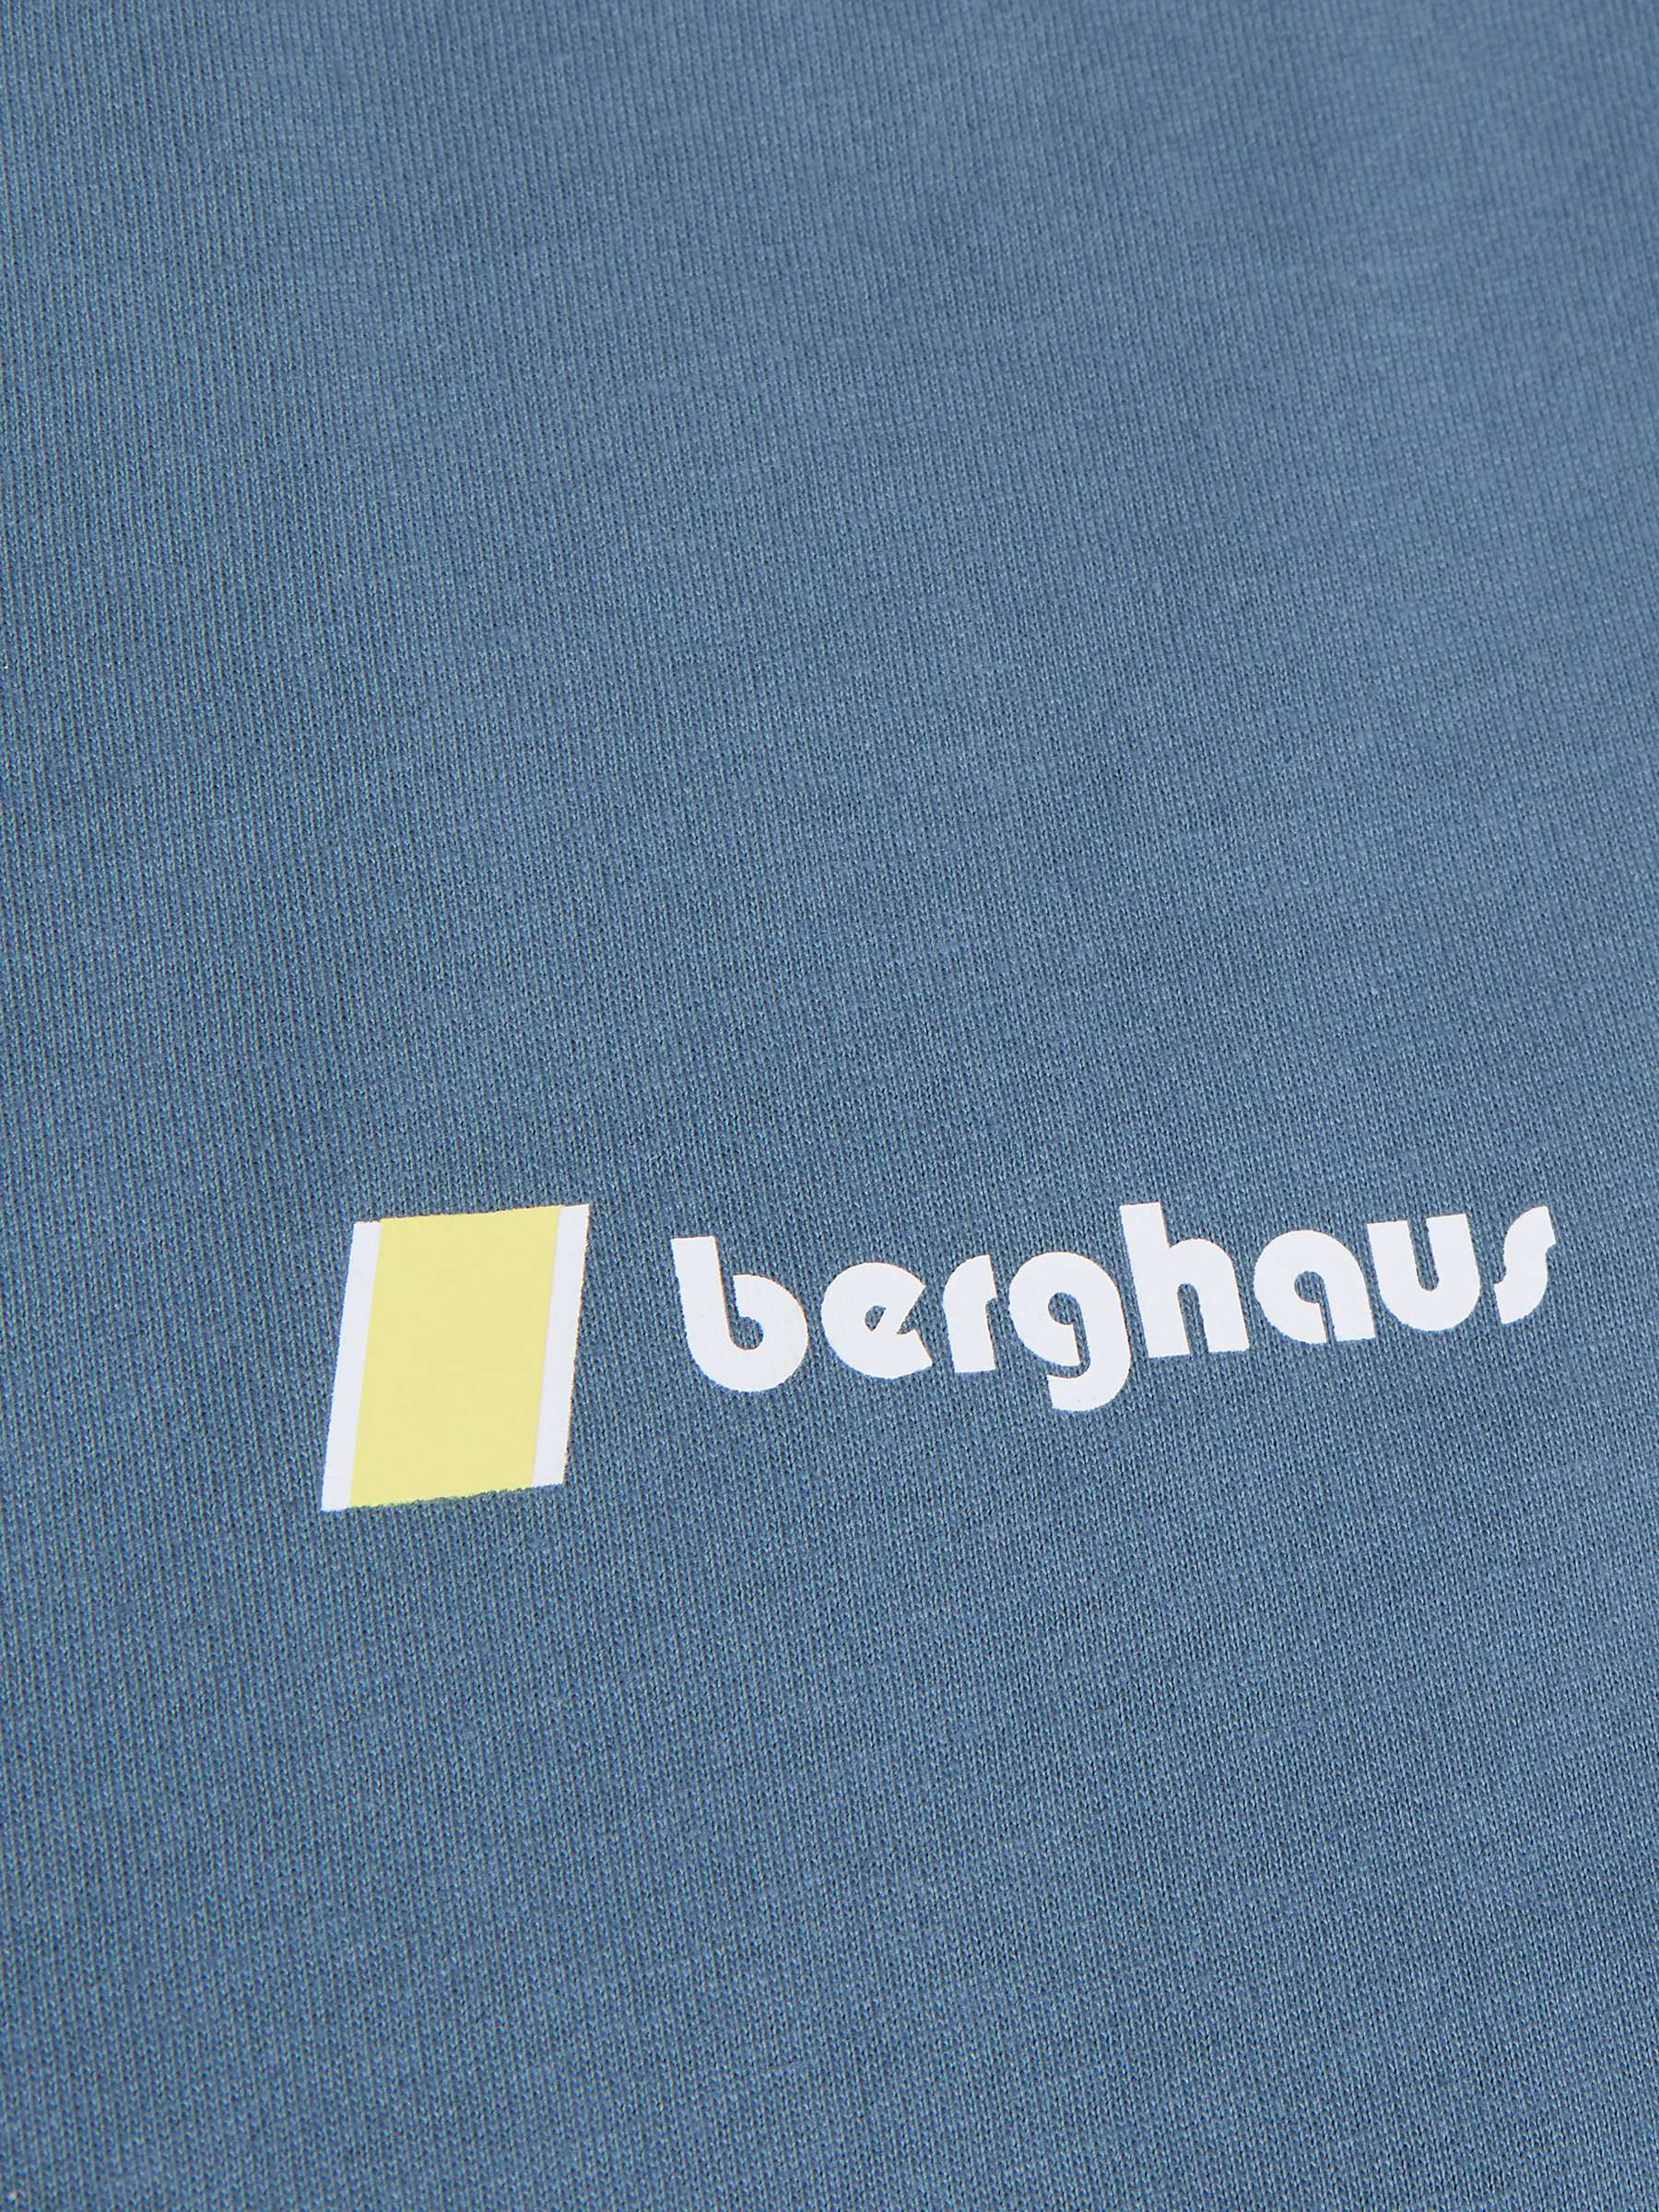 Buy Berghaus Climb Organic Cotton Short Sleeve T-Shirt, Airway Grey Online at johnlewis.com